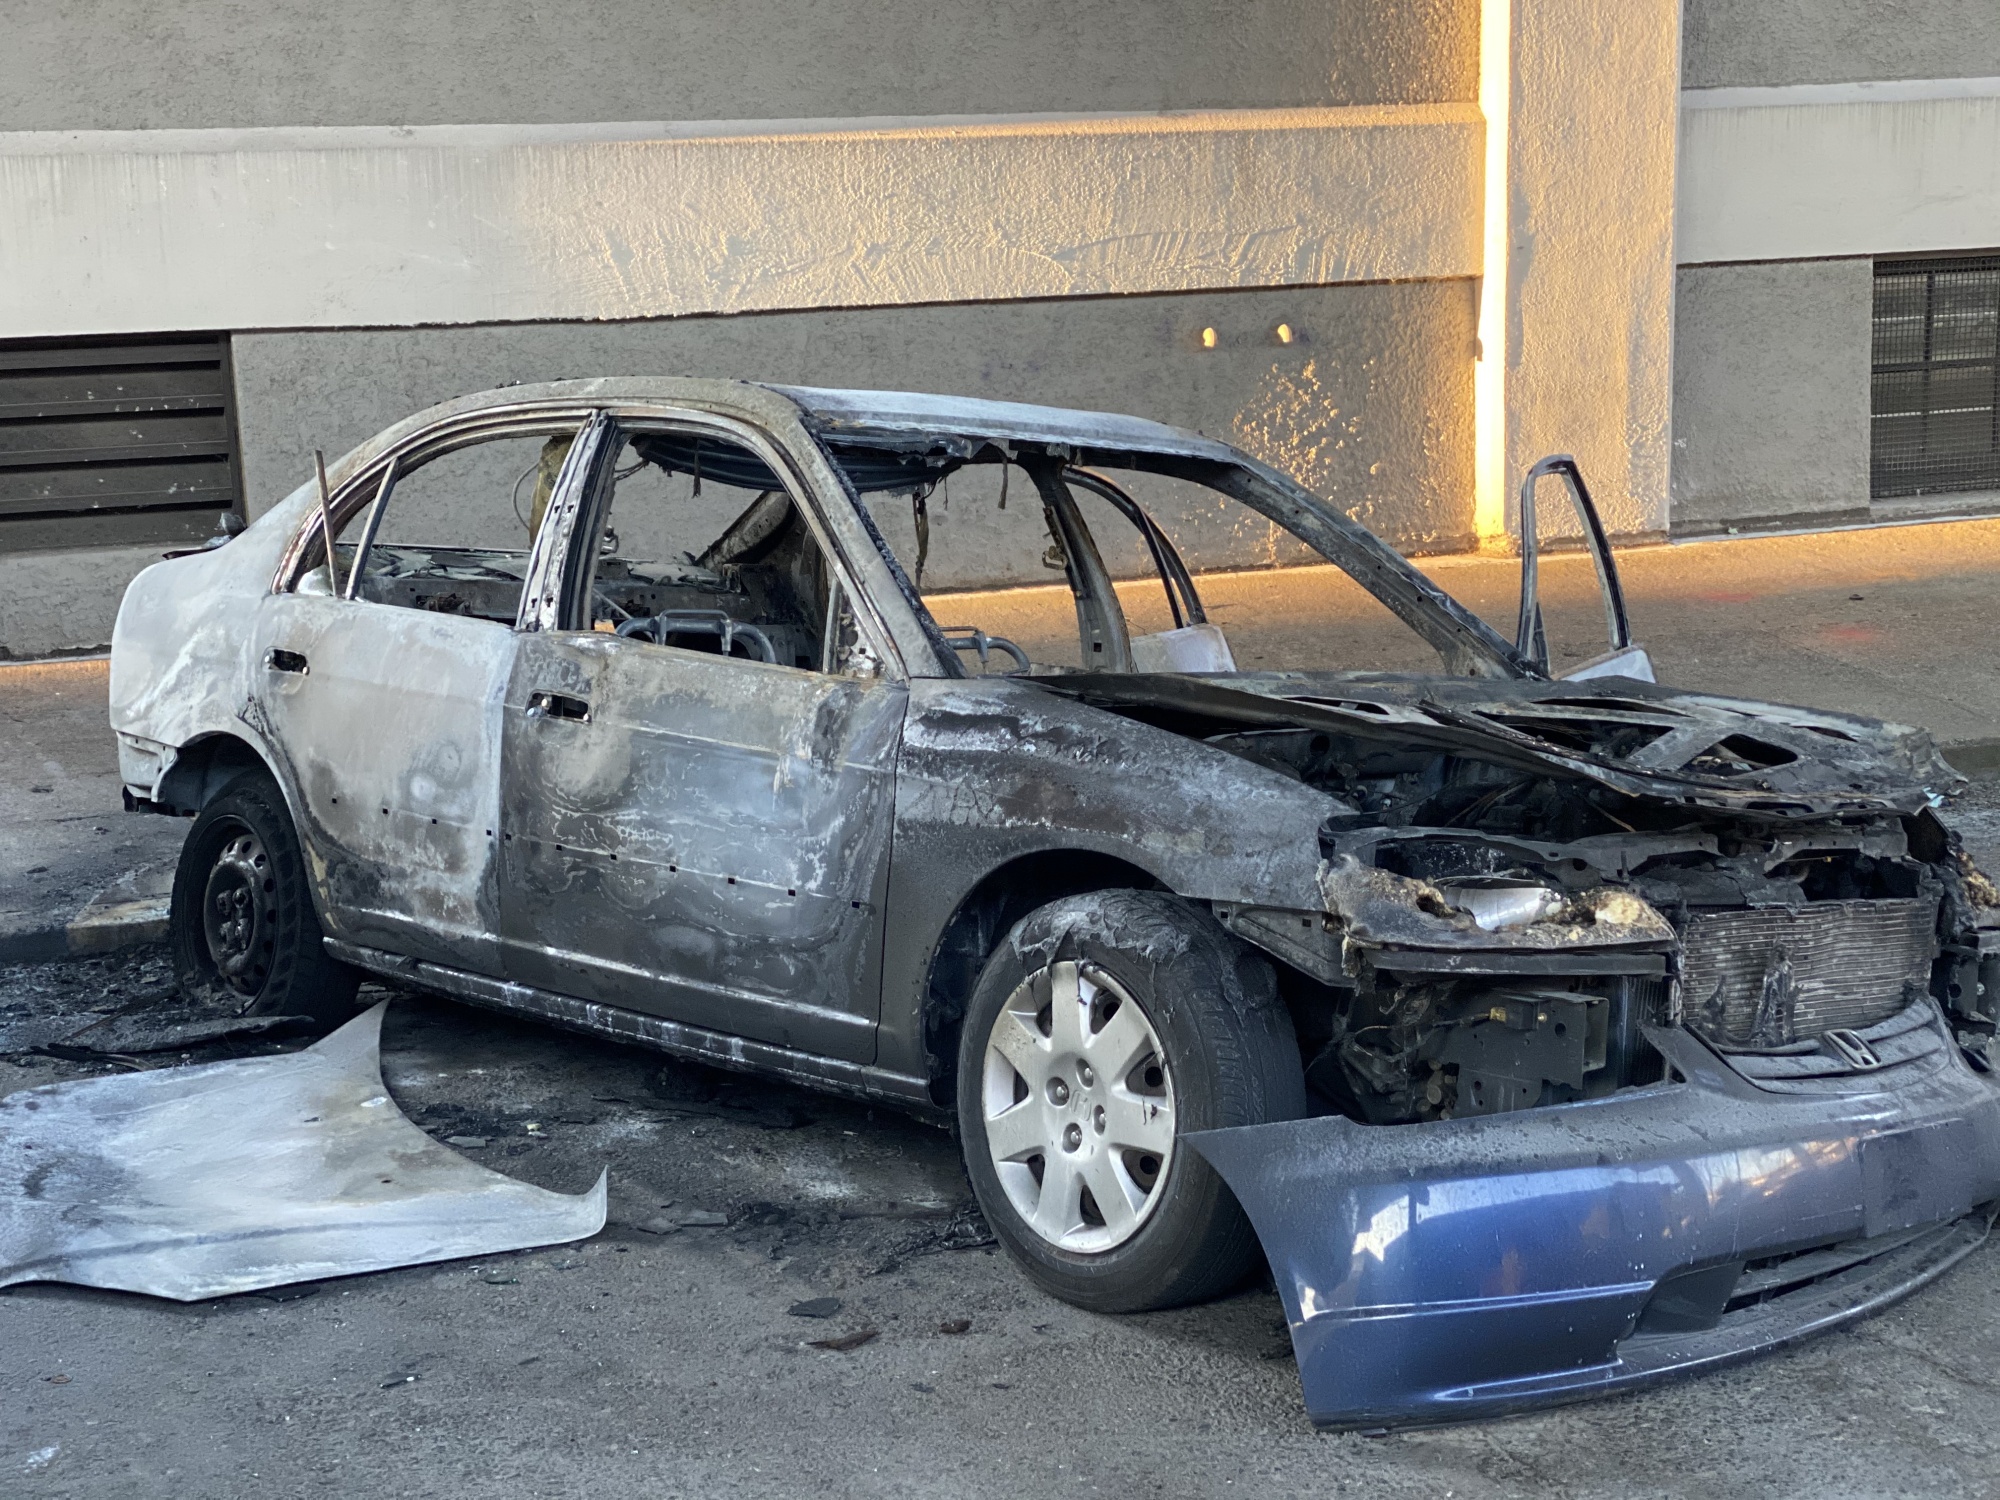 portland car burned out